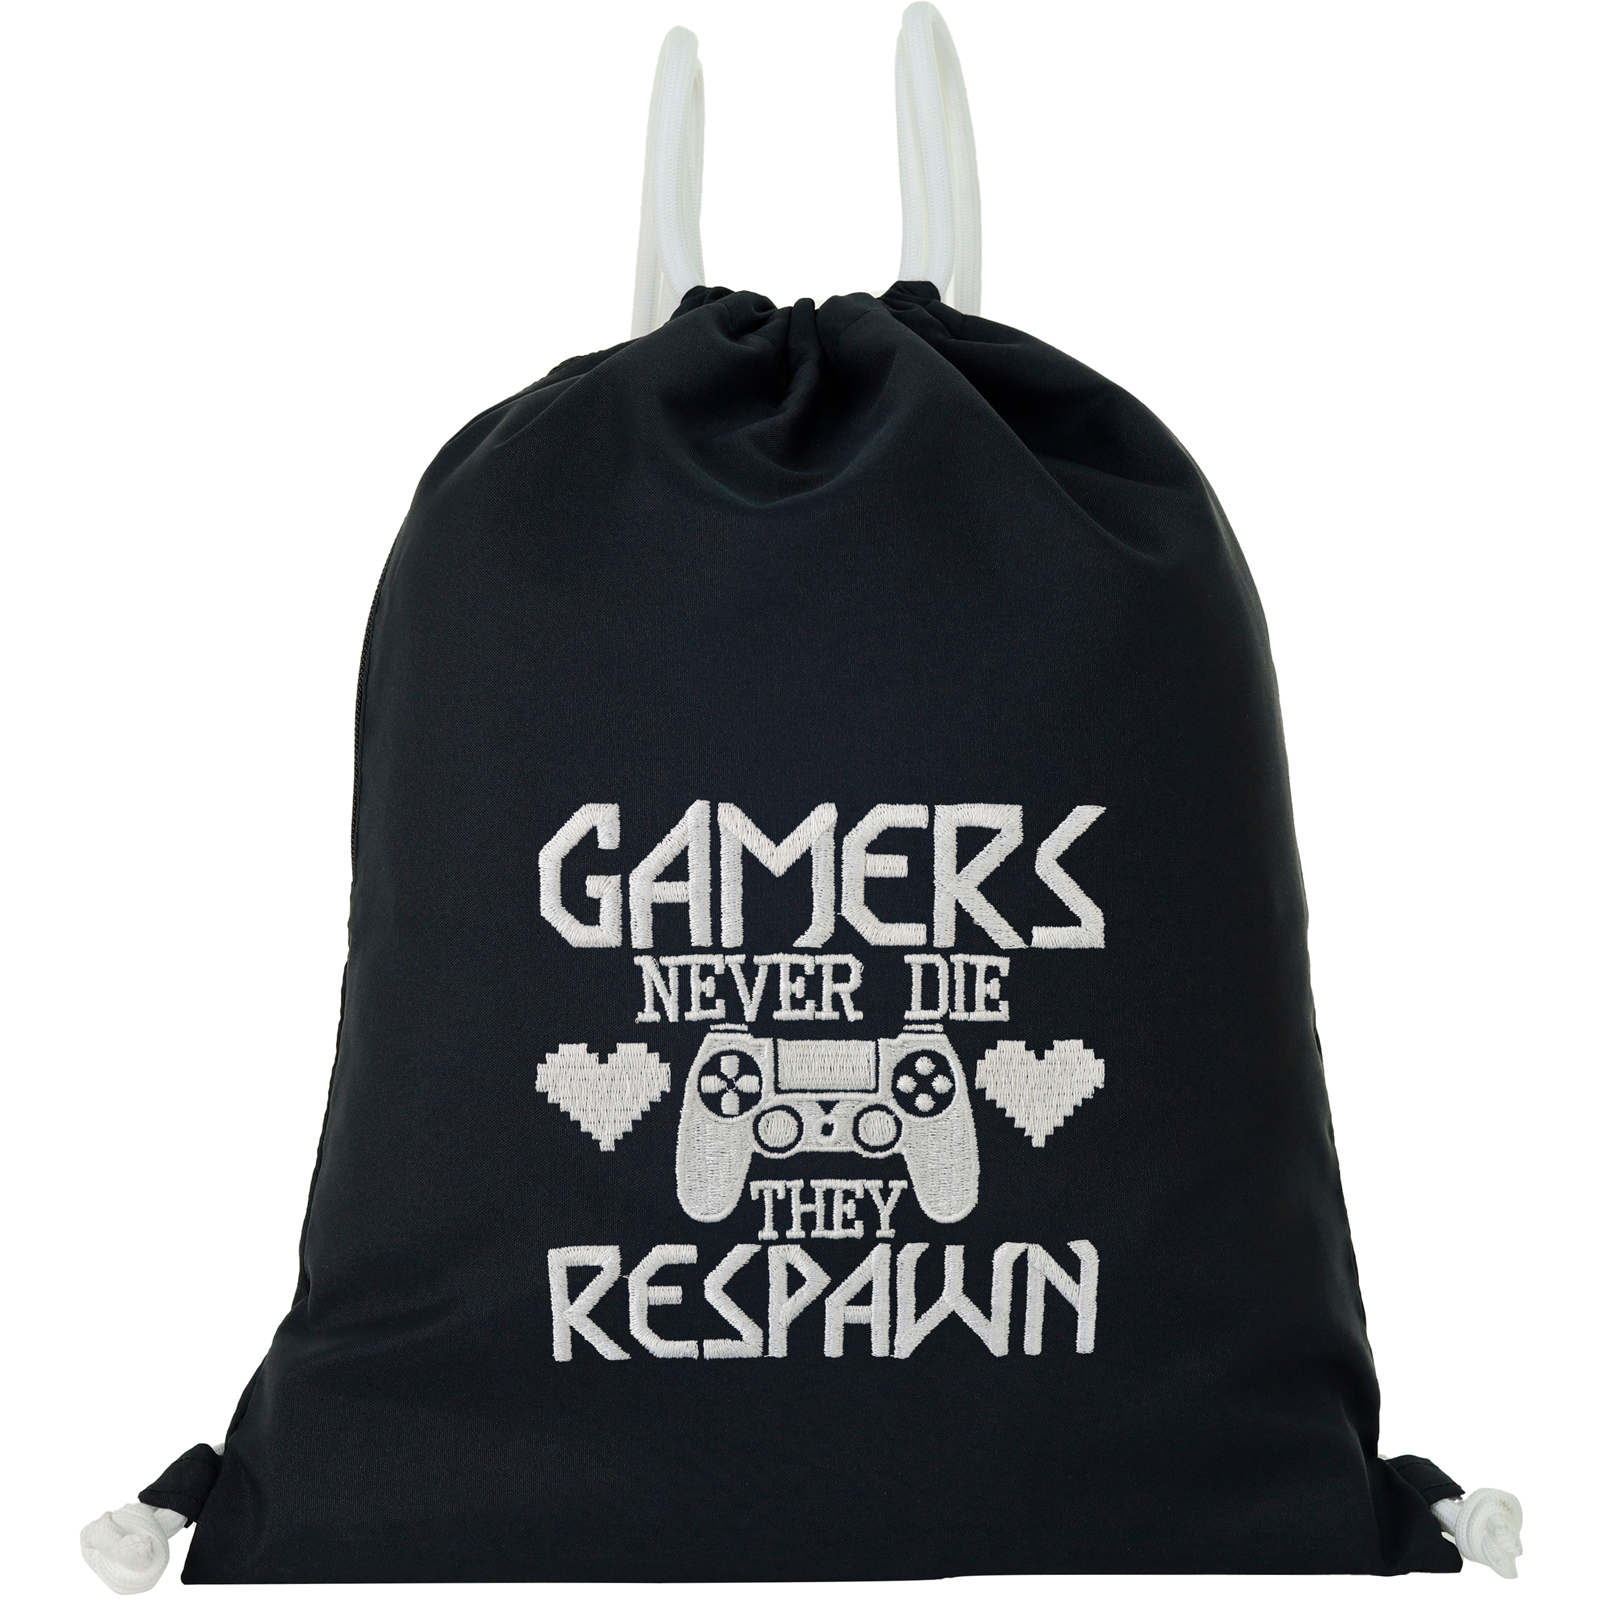 Gamers never die, they respawn - Turnbeutel